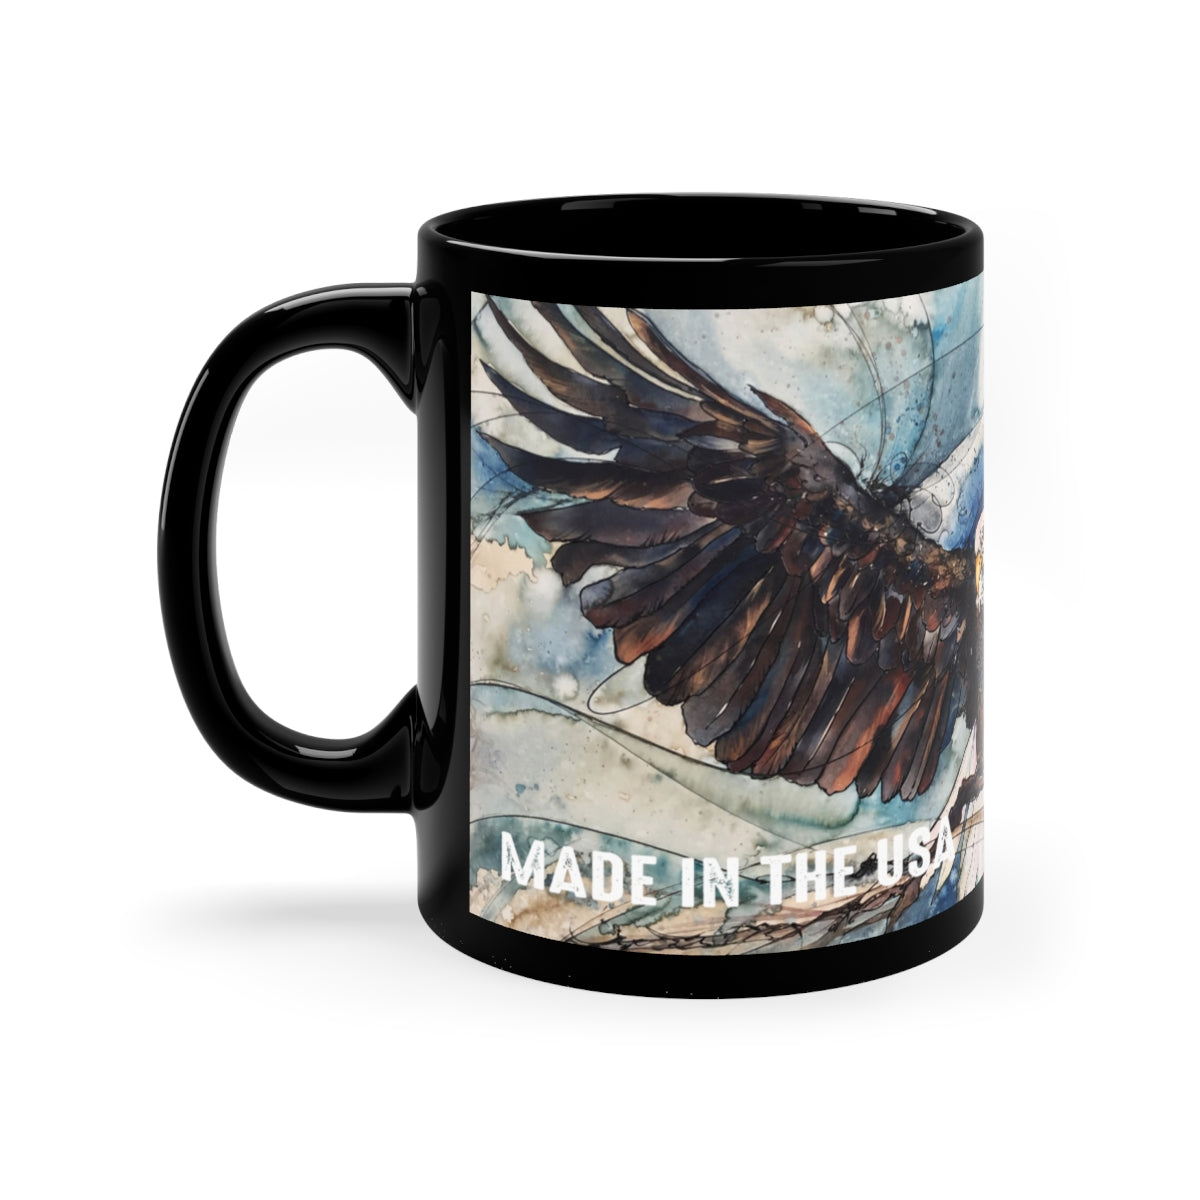 Tannerite® Home Made in the USA Bald Eagle Coffee Mug